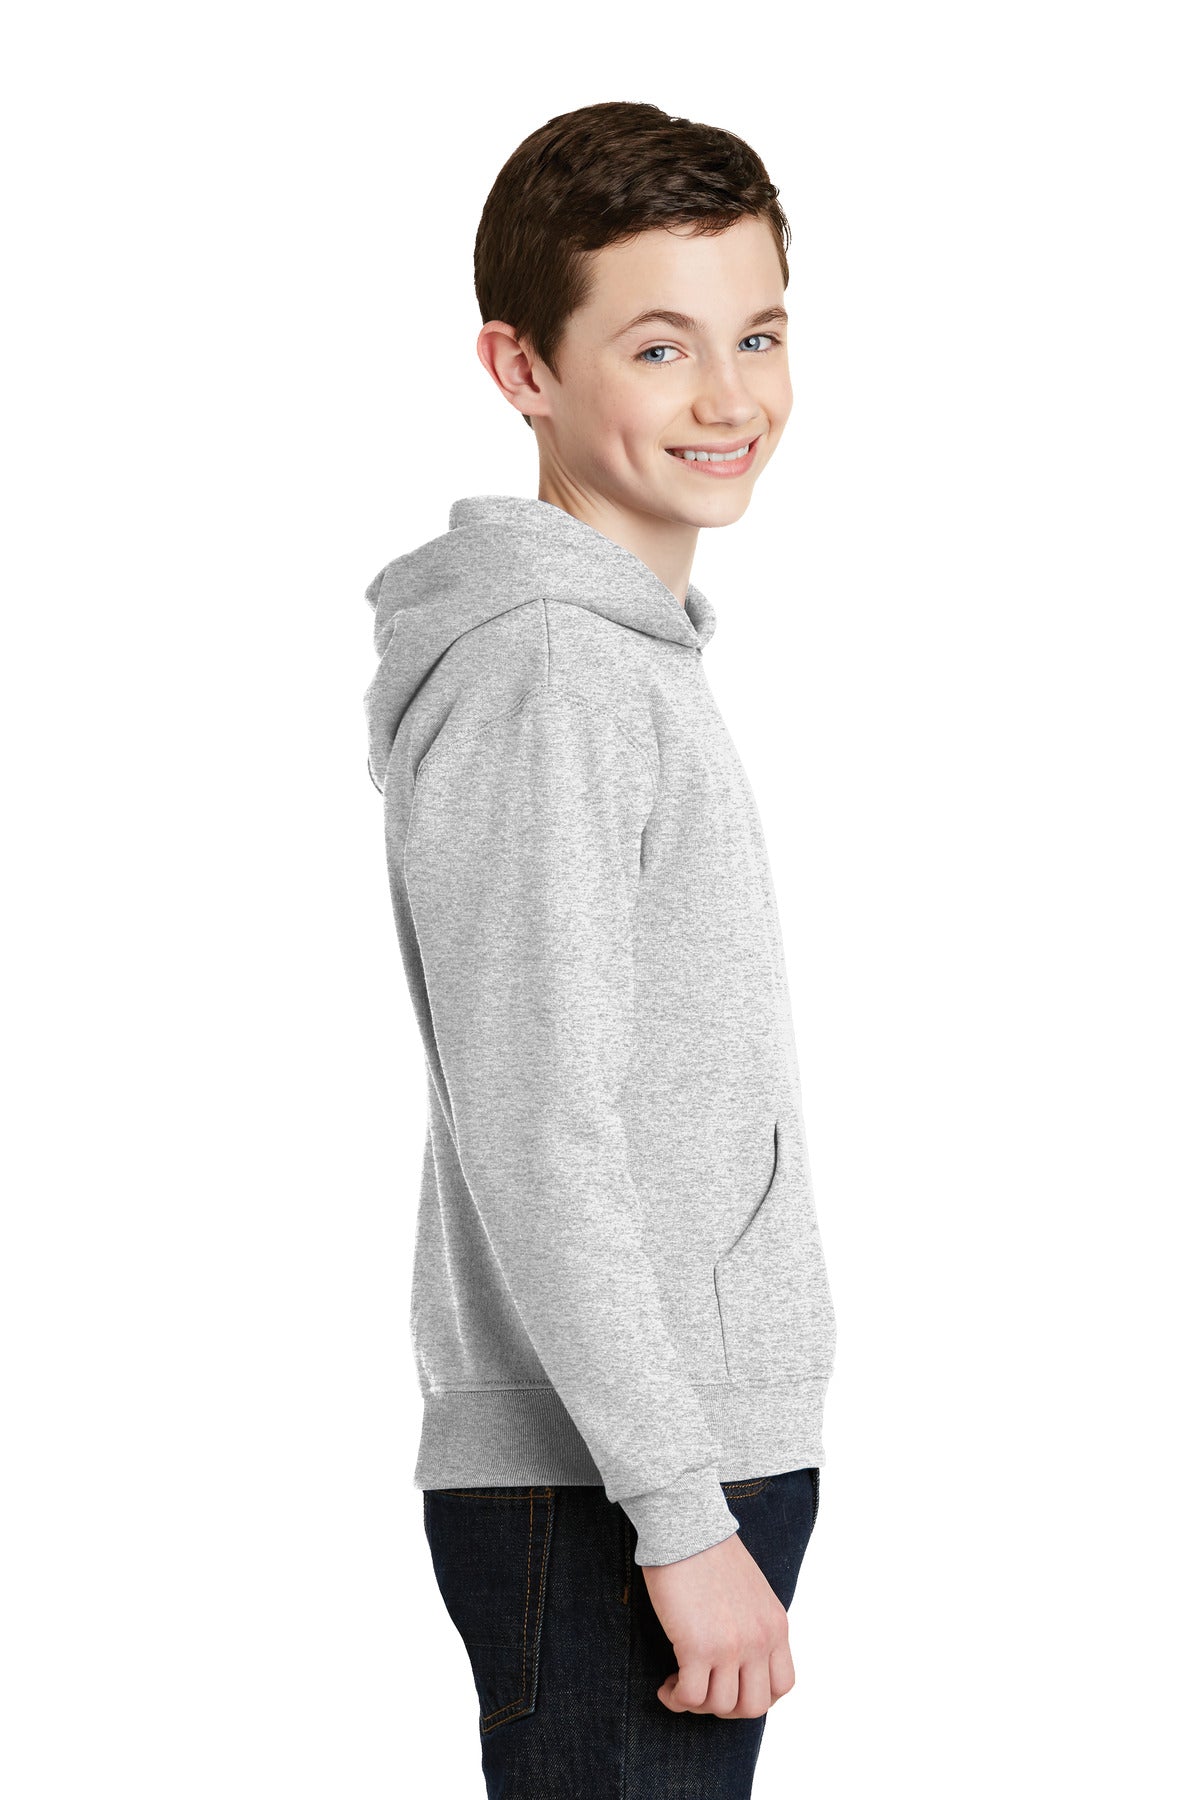 JERZEES® - Youth NuBlend® Pullover Hooded Sweatshirt. 996Y - DFW Impression